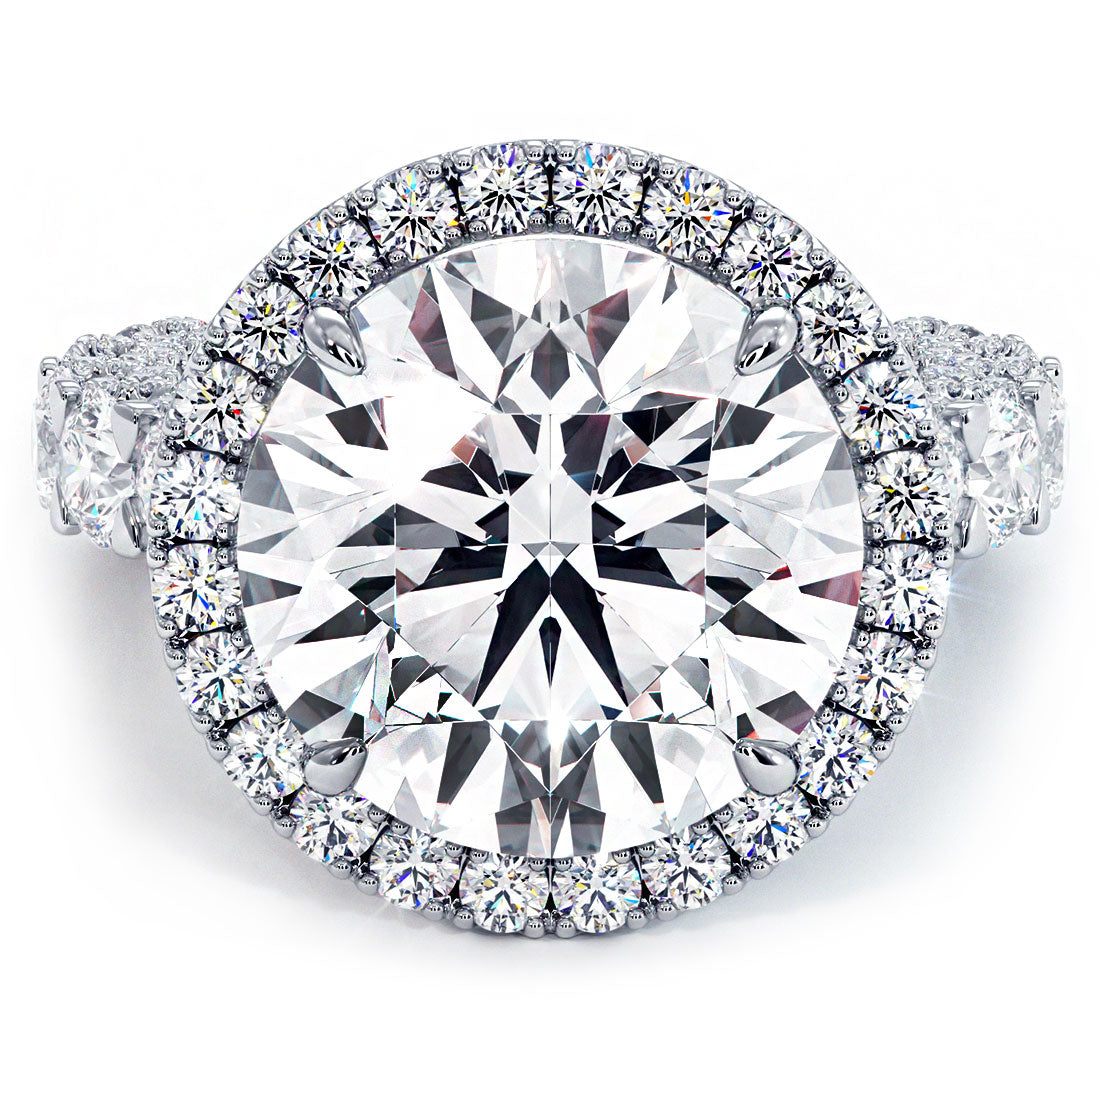 Engagement Ring 0.7 Carat Diamond H/SI1 , Six prongs 14k White Gold , Size 7  | eBay